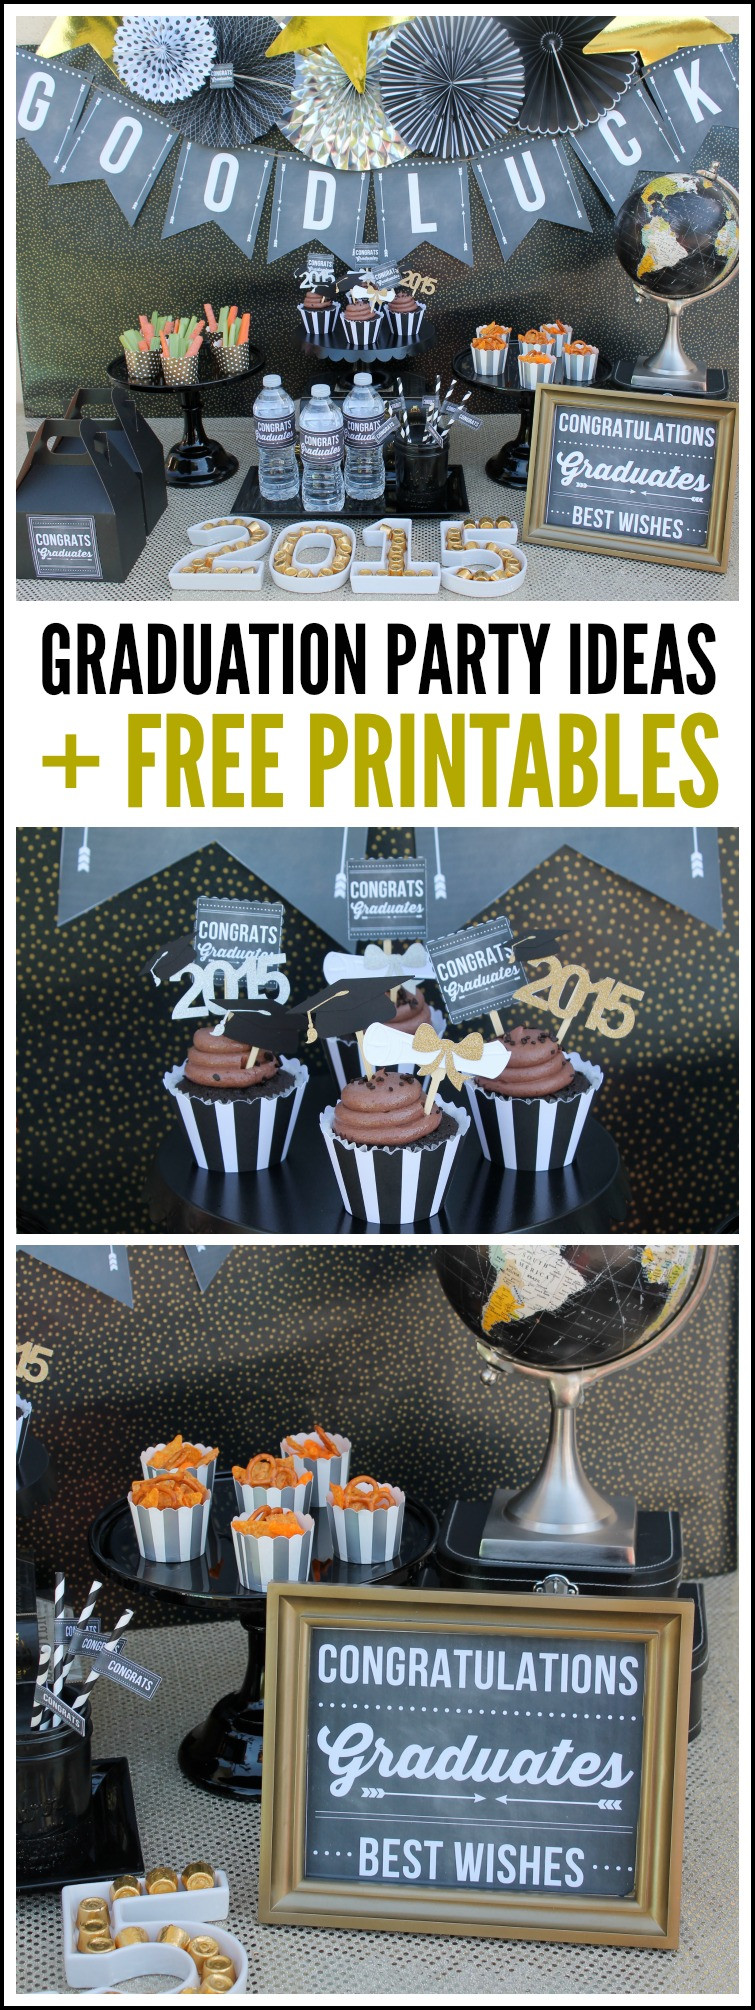 Party Ideas For Graduation Party
 Graduation Party Ideas Free Printables